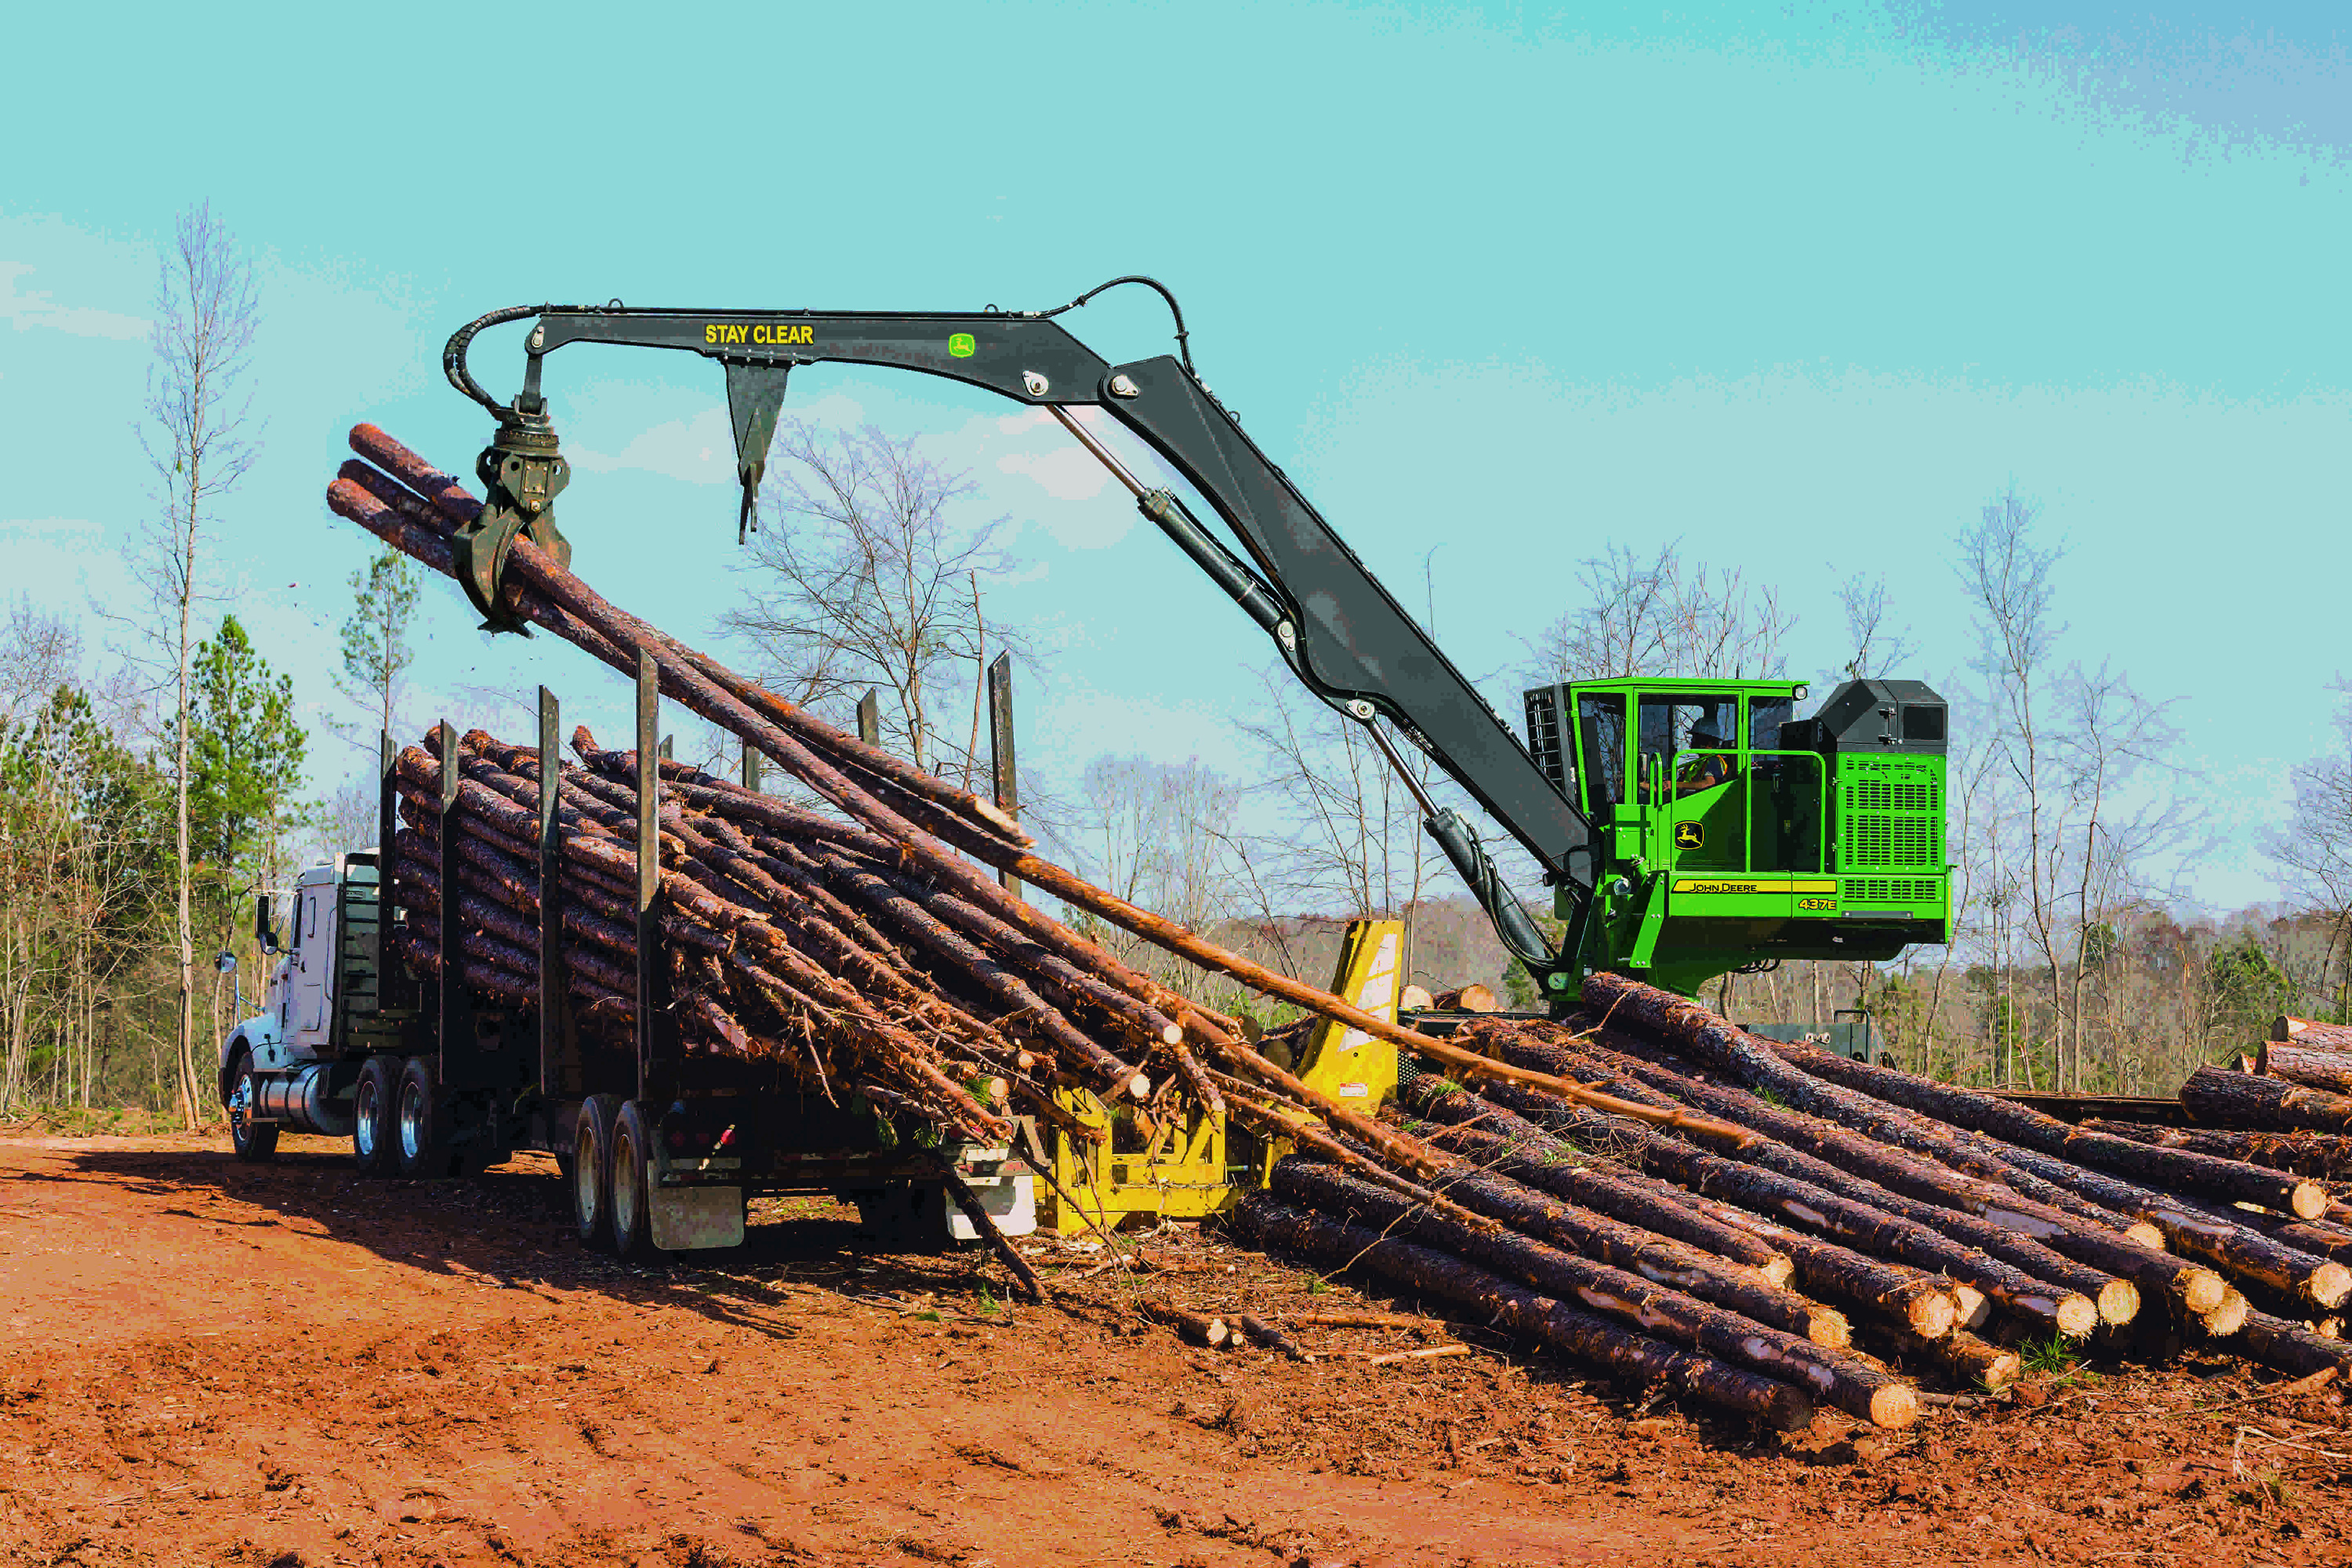 The John Deere 437E knuckleboom loader piling logs at a jobsite.